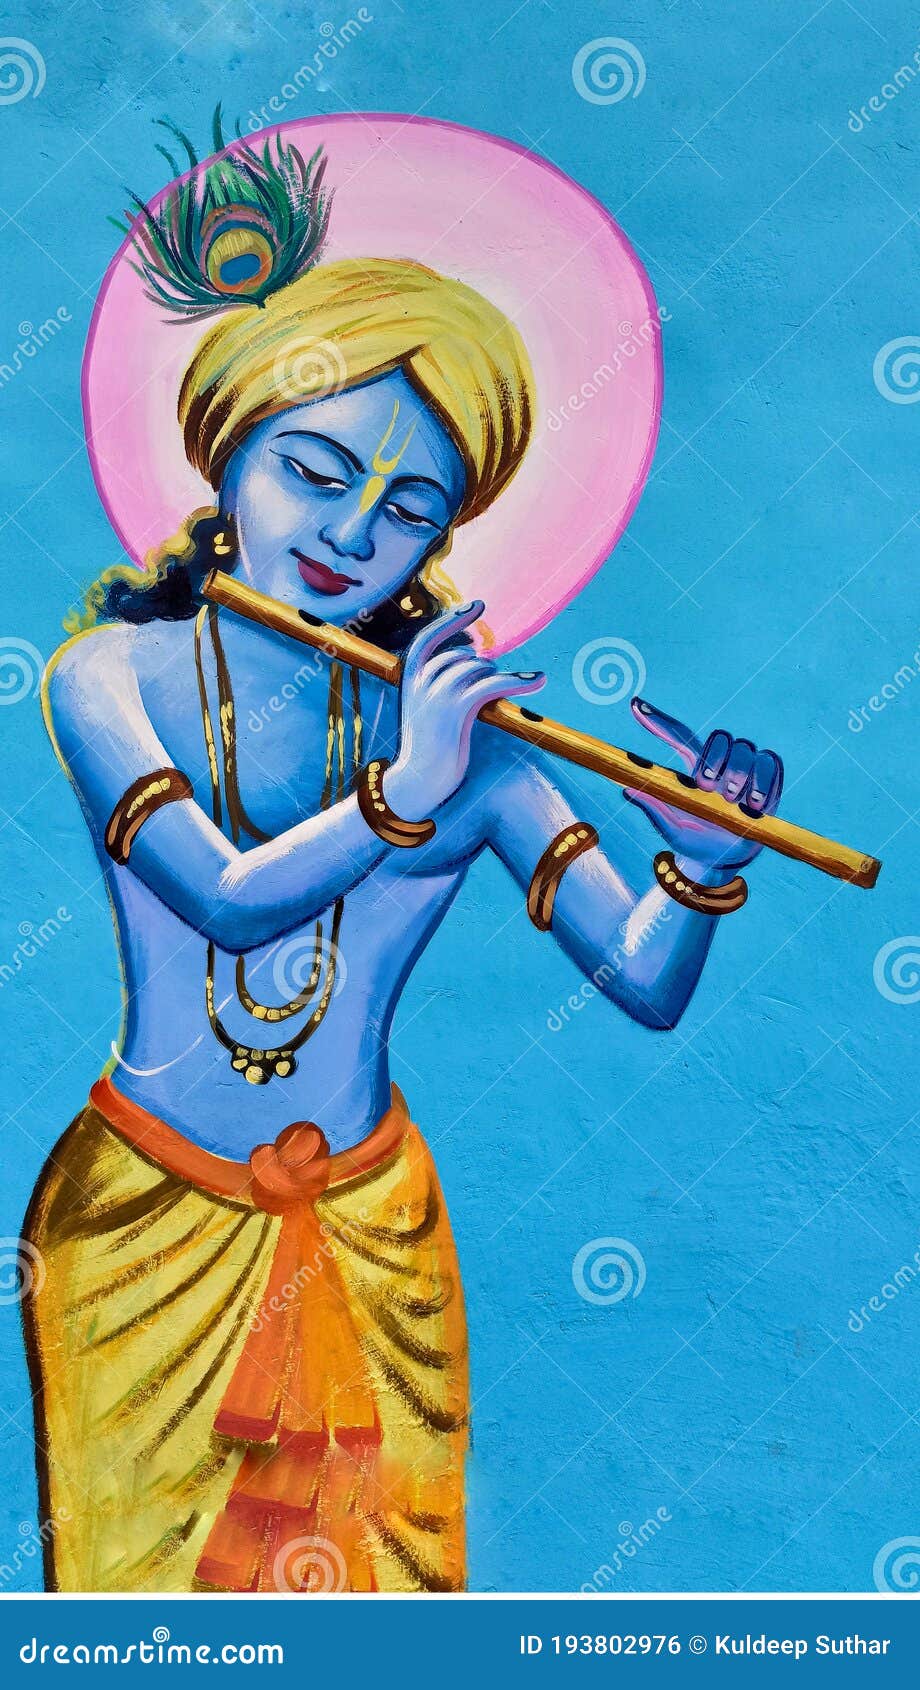 Shri Krishna Live Wallpaper:Amazon.com:Appstore for Android